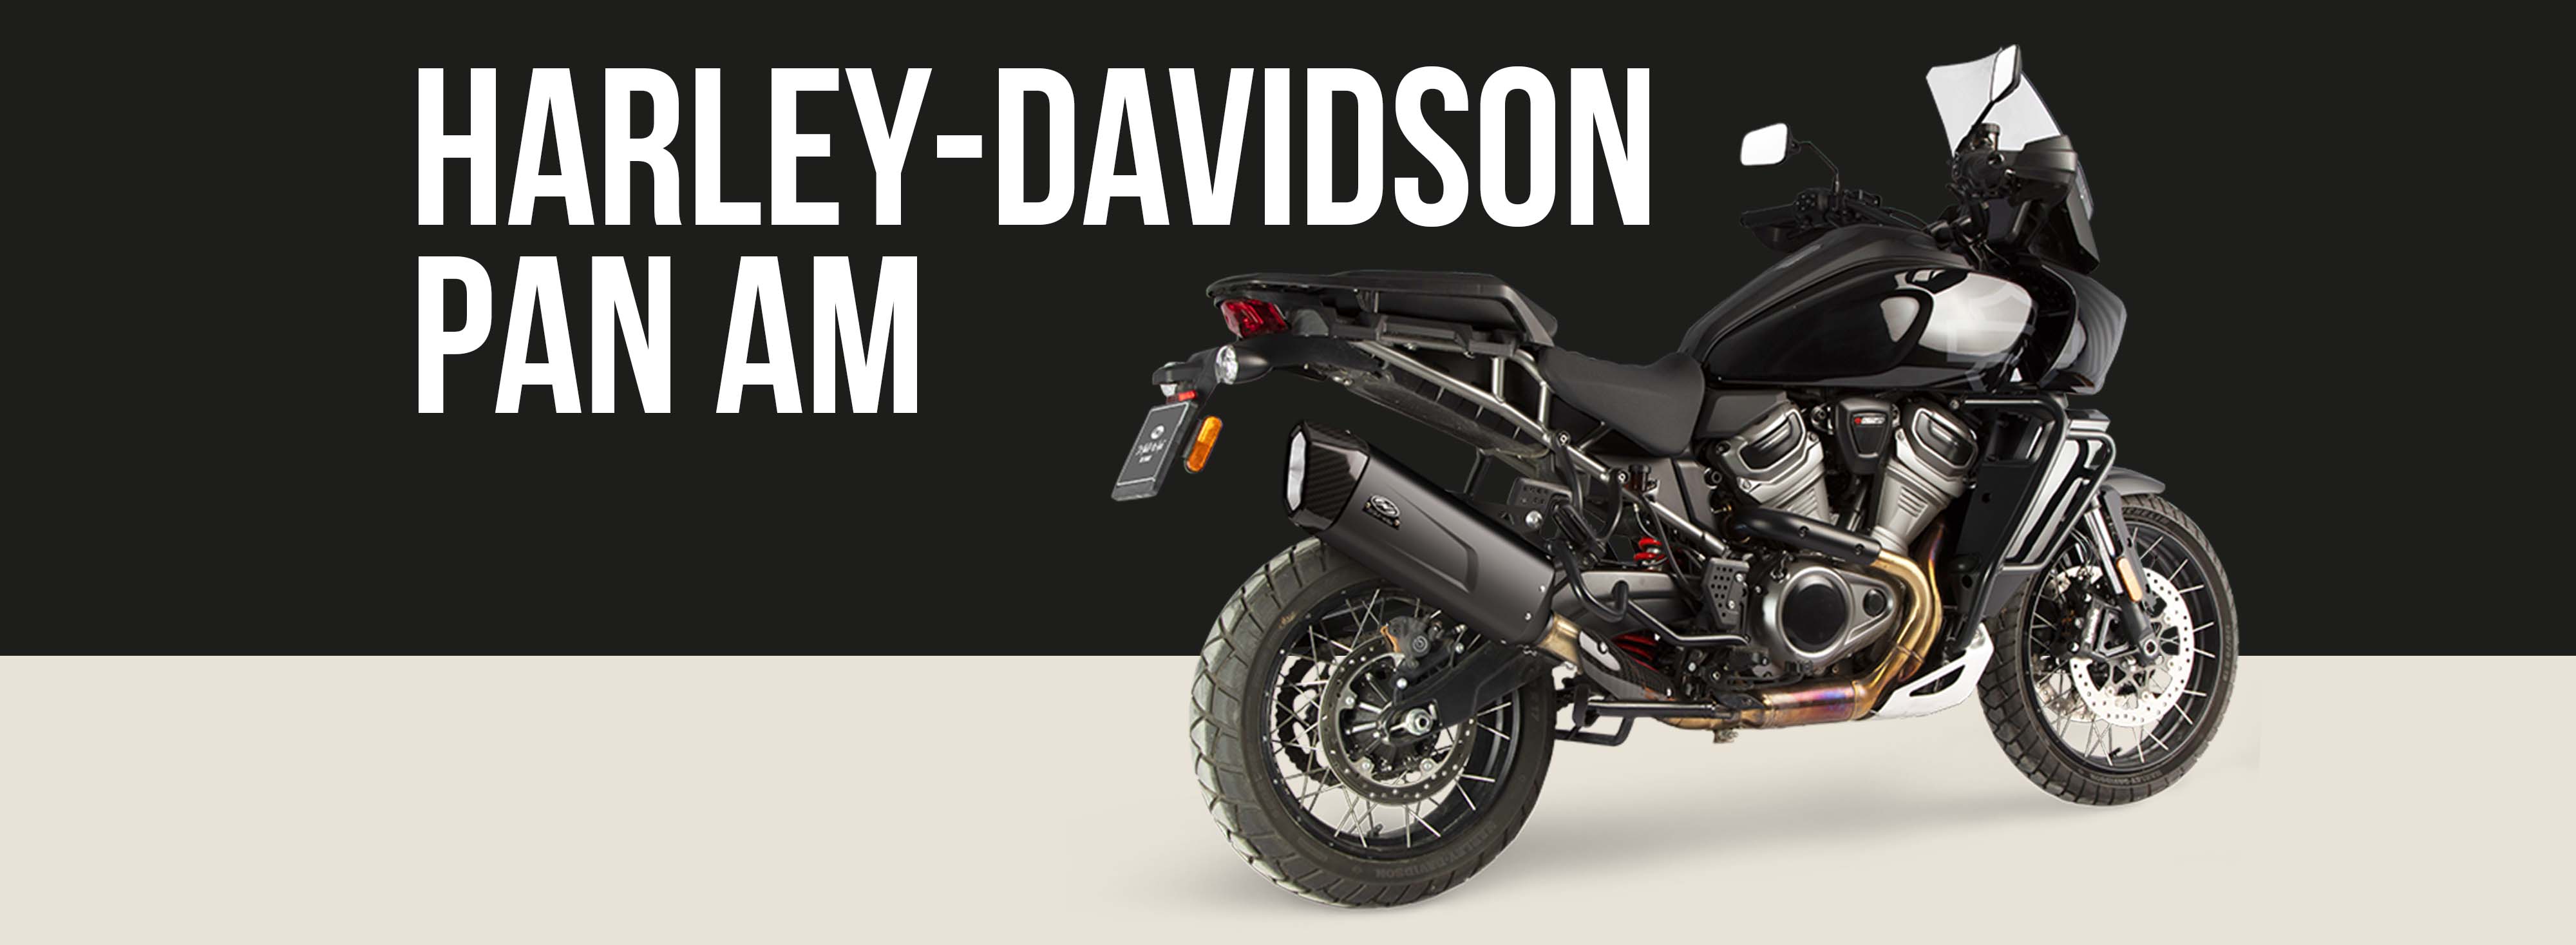 Harley-davidson Pan Am Motorcycle Brand Page Header